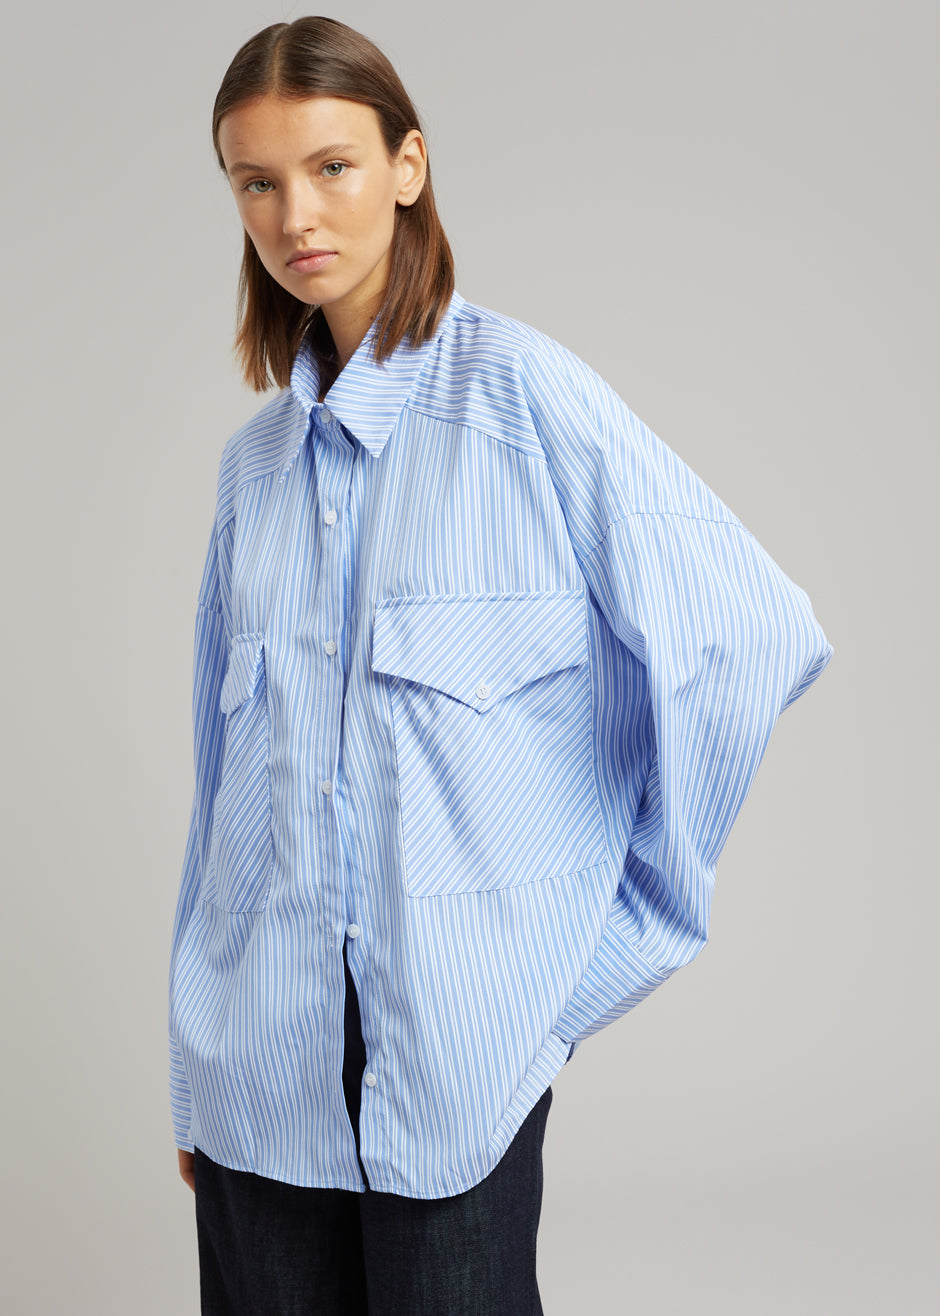 Orson Pocket Shirt - Blue Stripe - 2